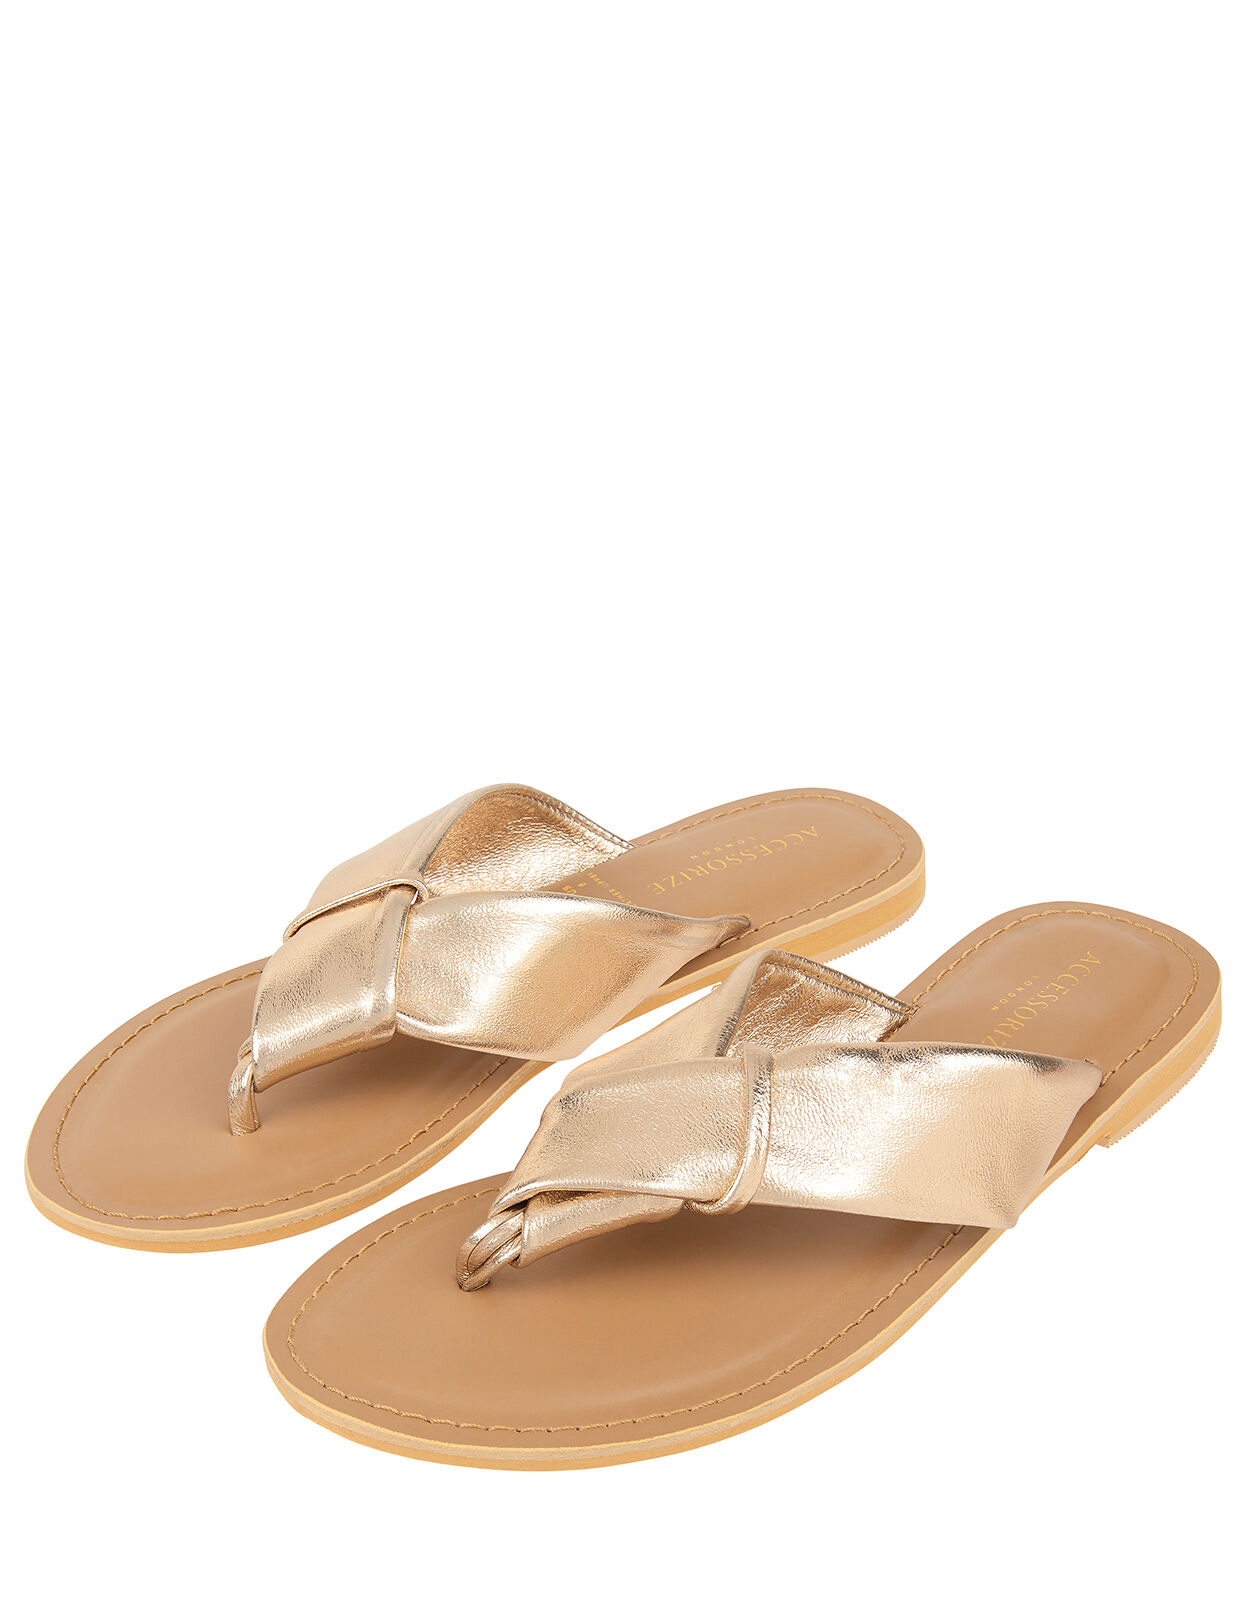 gold thong sandals